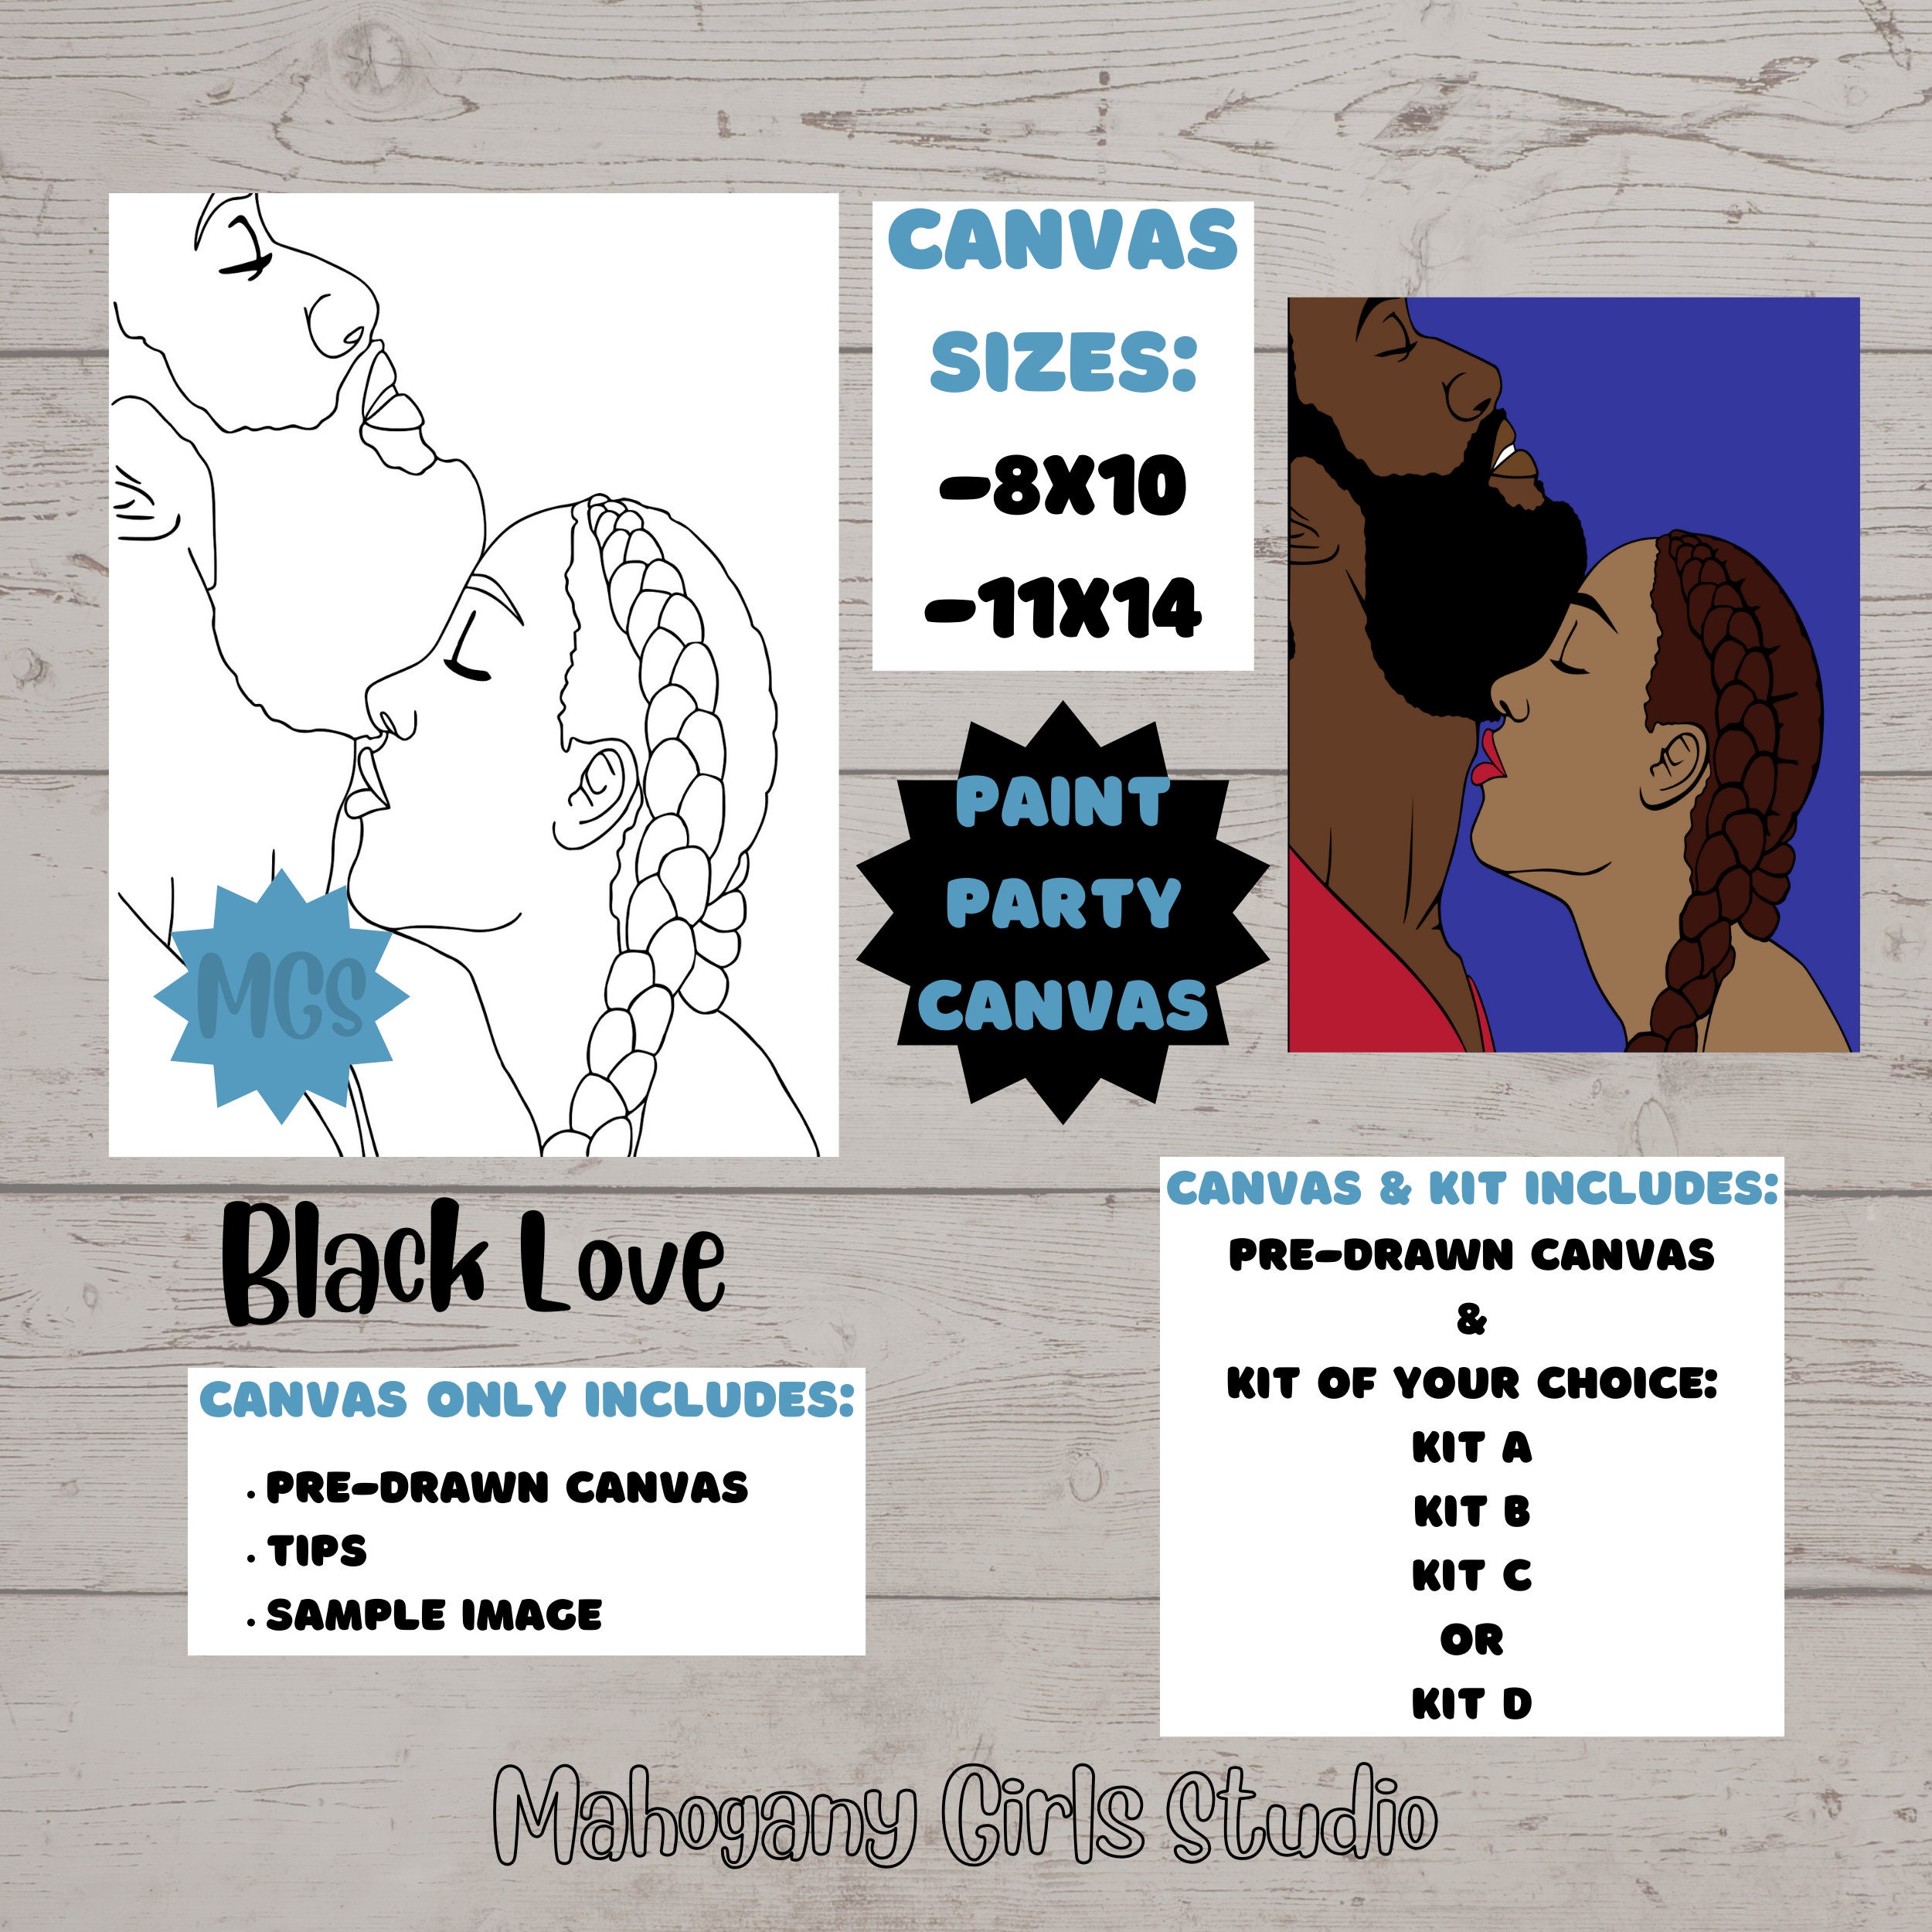 Black Love / Pre-drawn Canvas / Pre-sketched Canvas / Outlined Canvas / Sip  and Paint / Paint Kit / Canvas Painting / DIY Paint Party 